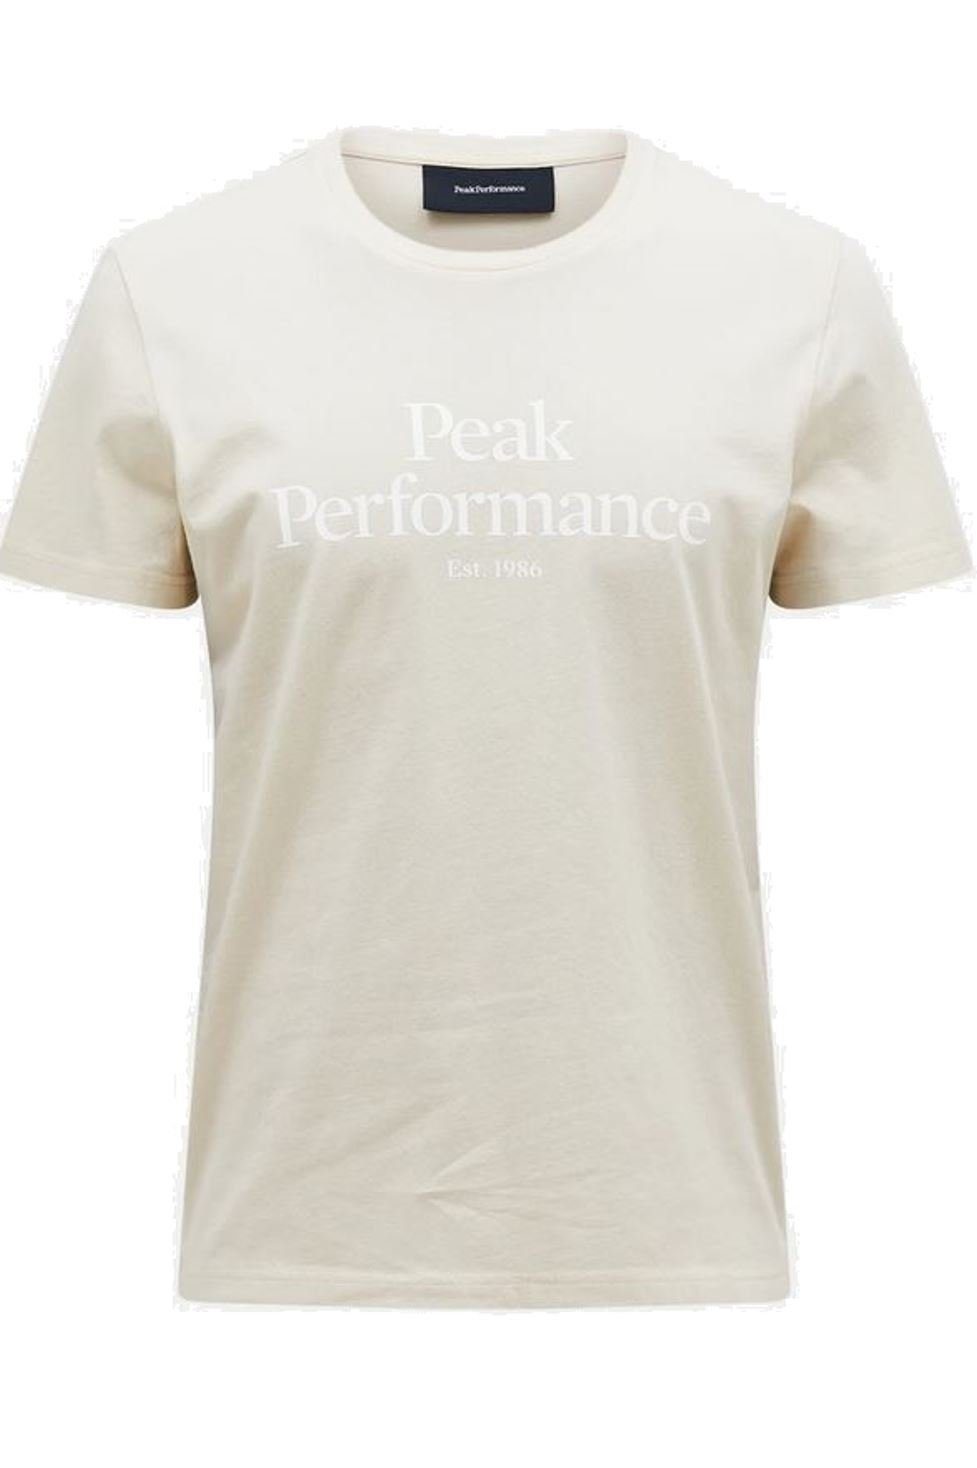 Peak Performance Funktionsshirt, Peak Performance T-Shirt Sand Herren ORIGINAL